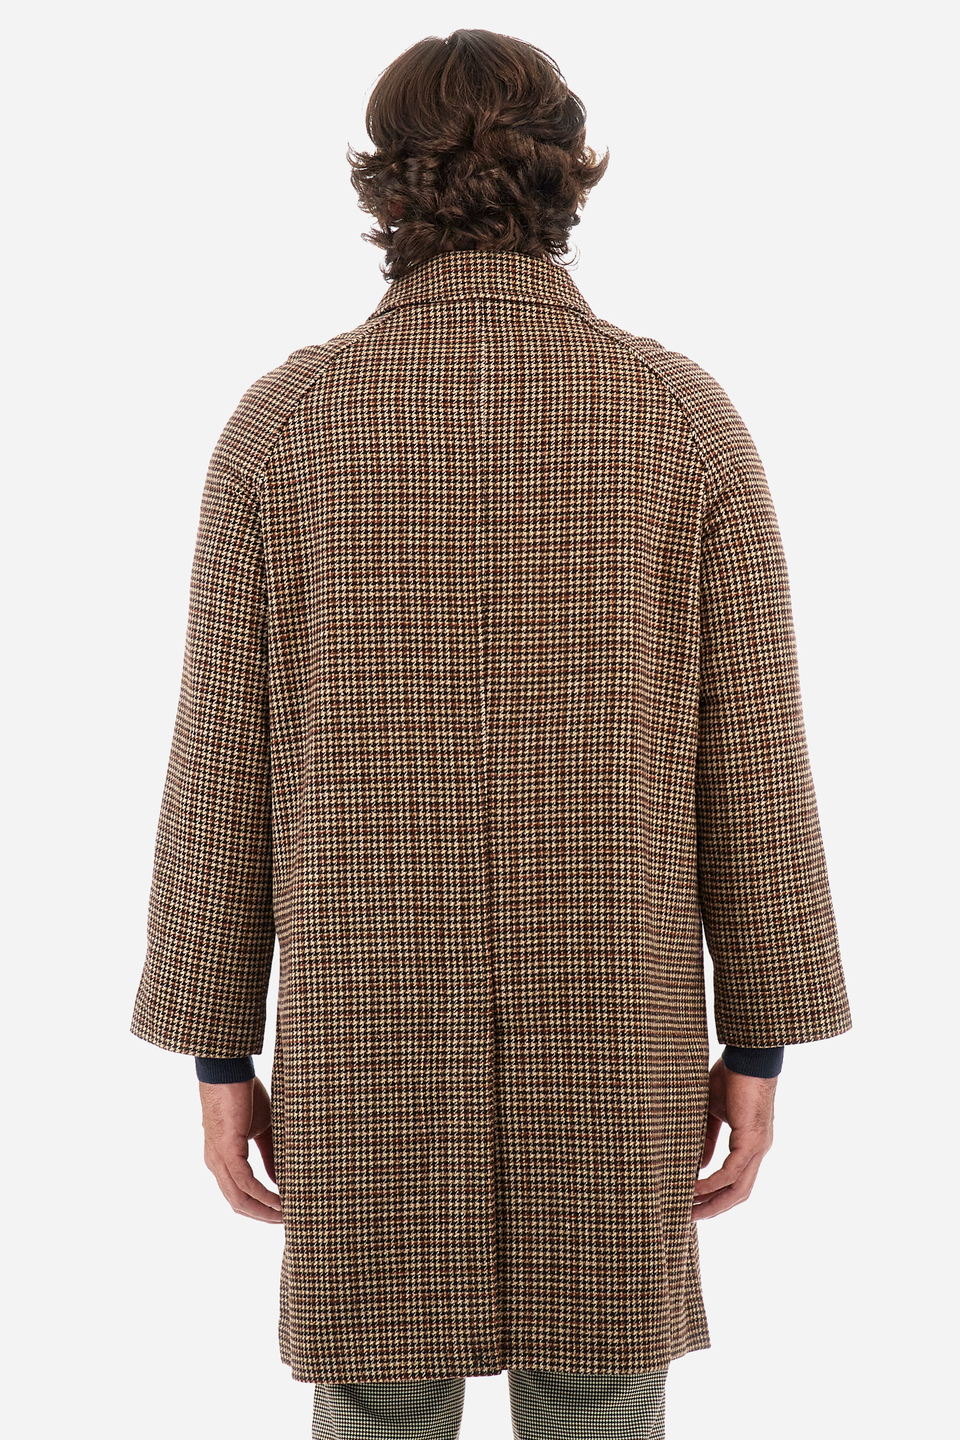 Outdoor cappotto uomo regular fit - Worthington | La Martina - Official Online Shop